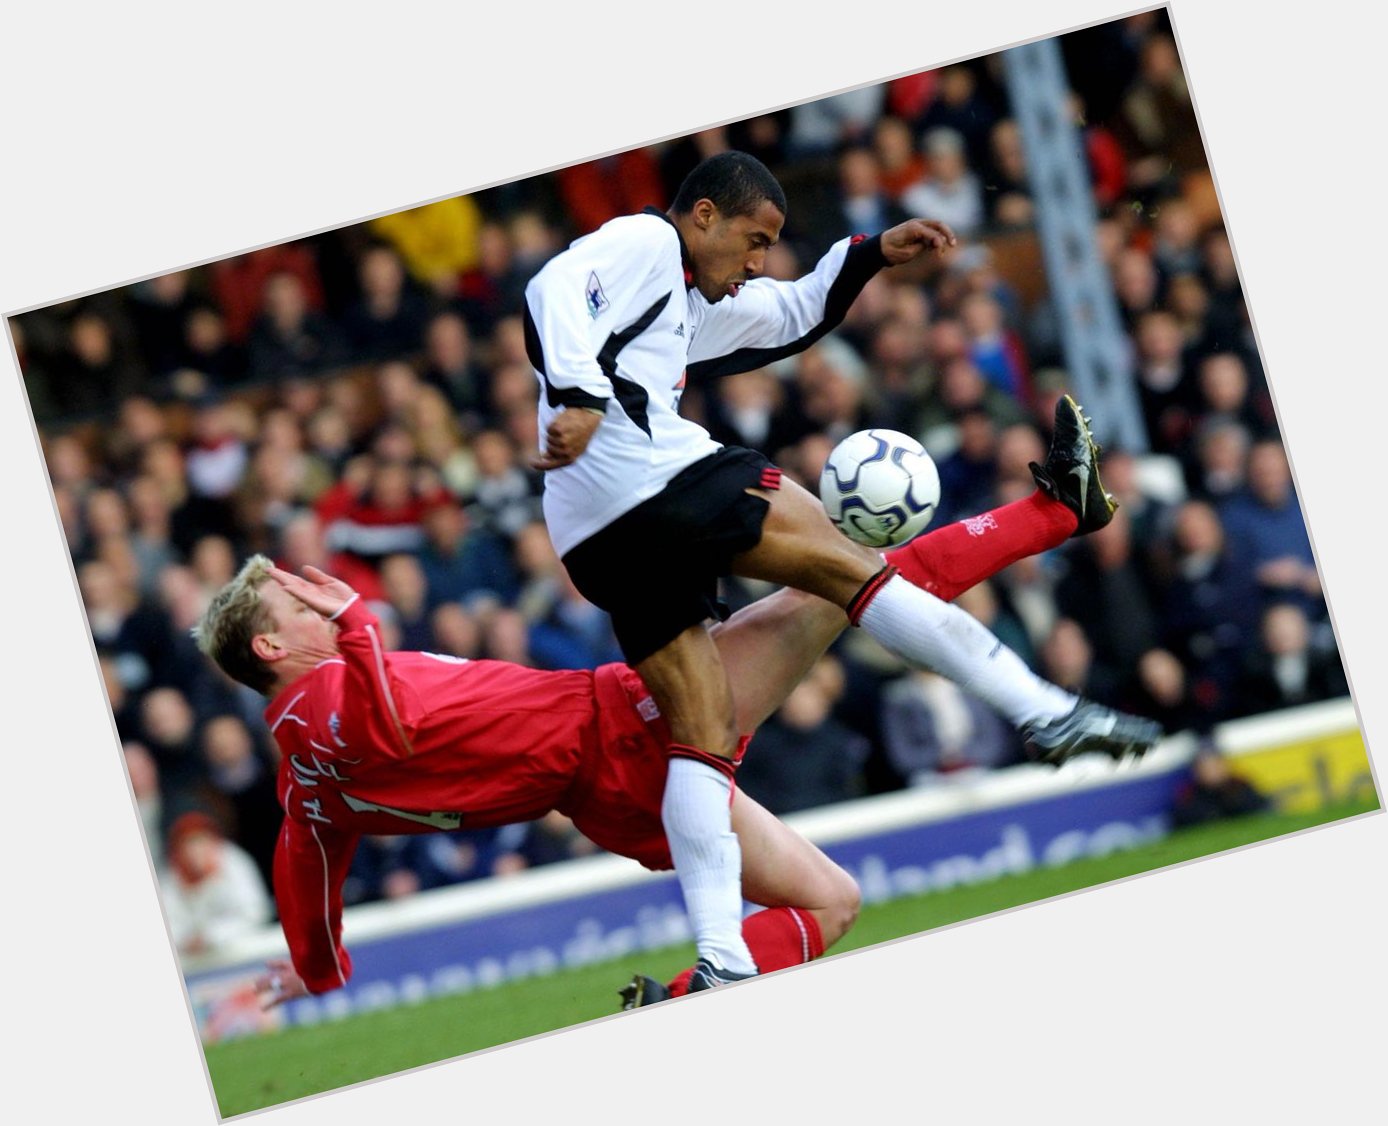  liveblog: Happy birthday Stephane Henchoz! Who remembers this wonder tackle at Fulham?
 